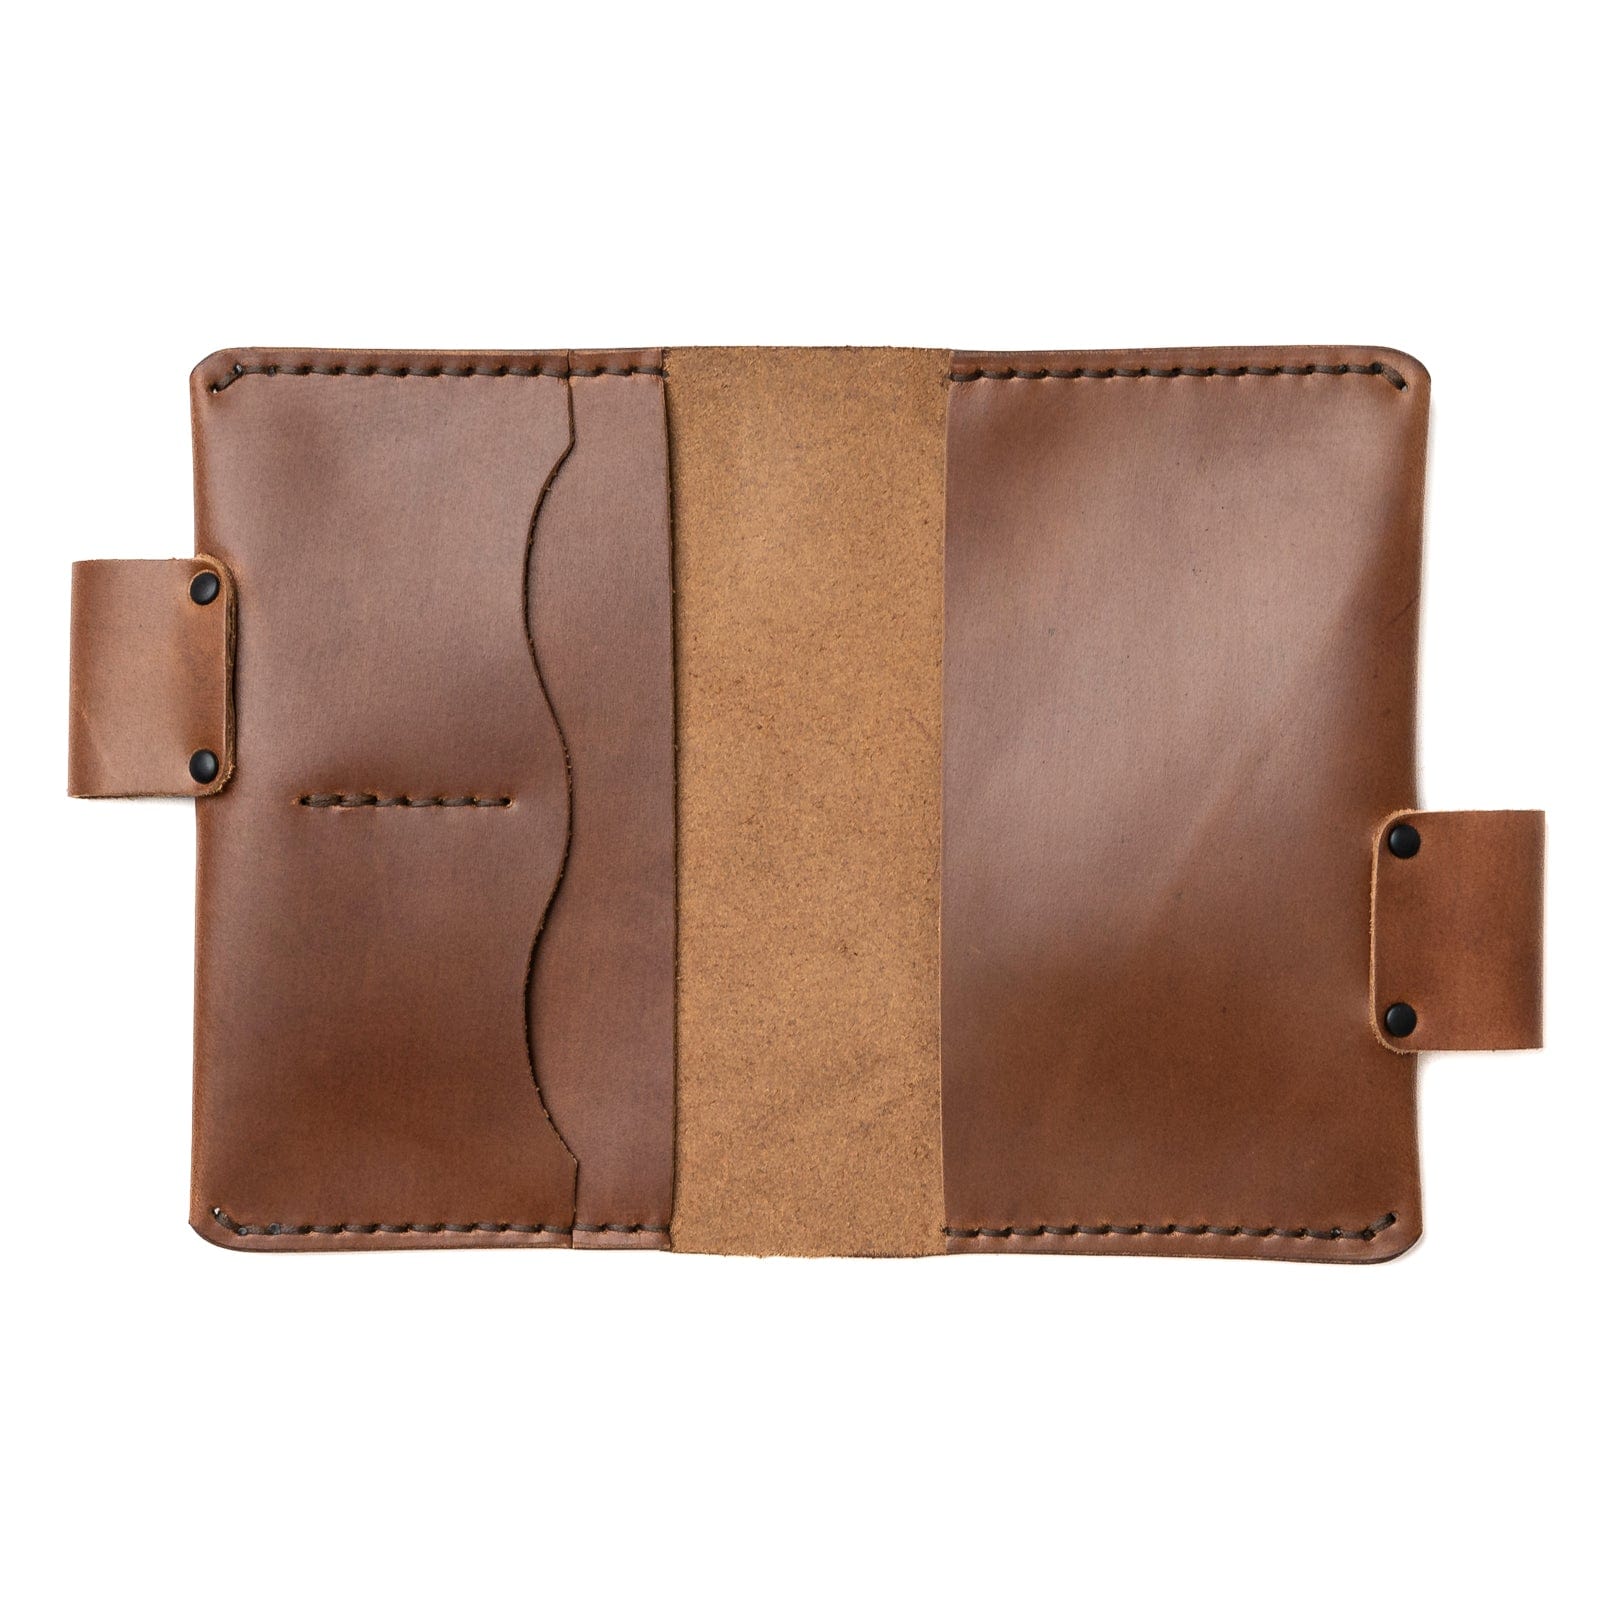 Leather Moleskine Pocket Cover - Natural Popov Leather